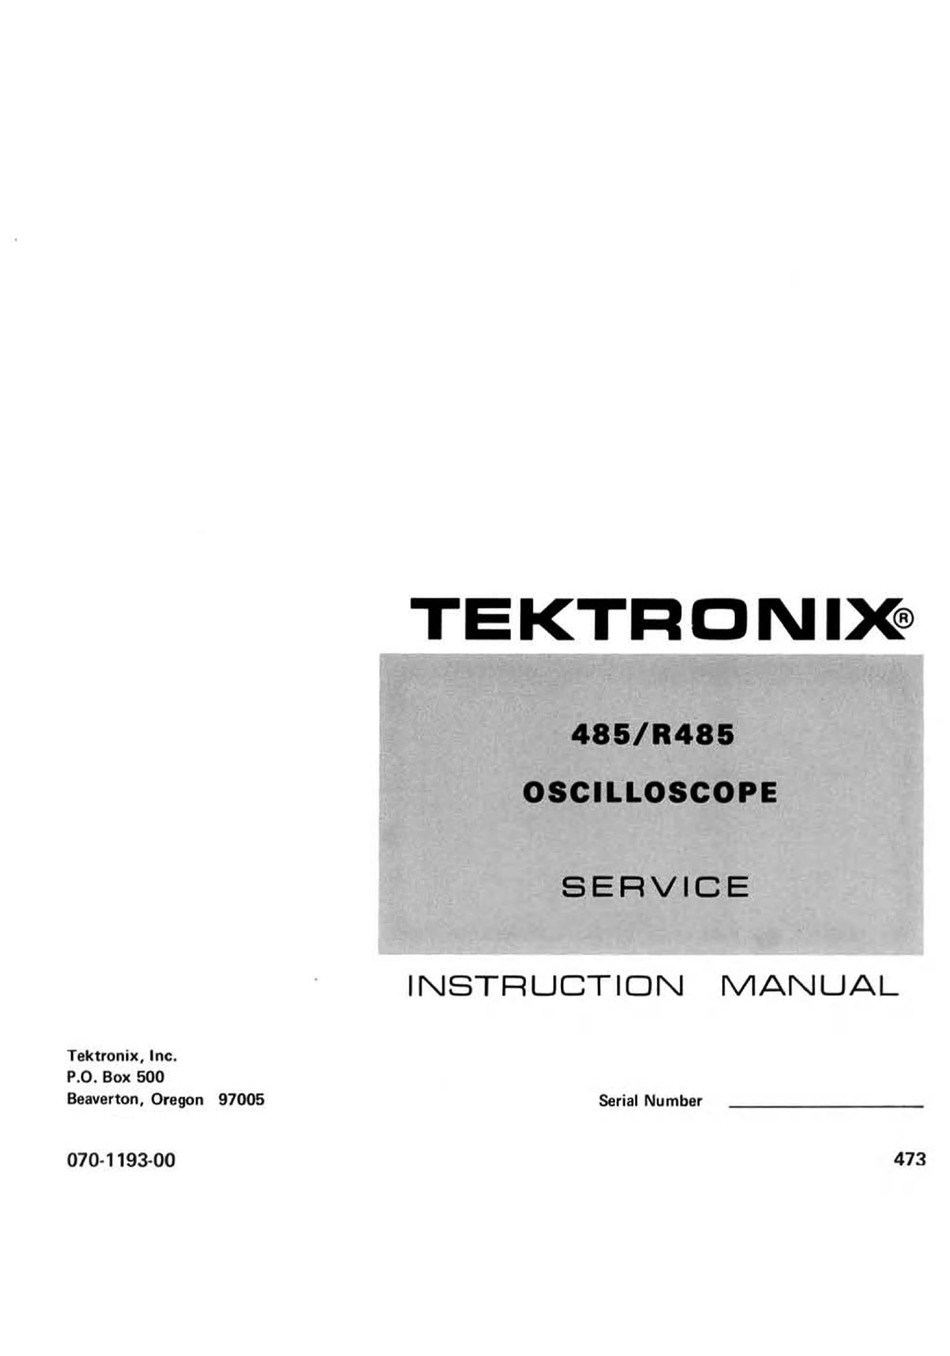 Operating & Service with schematics Tektronix Tek 485 Oscilloscope,Manual 